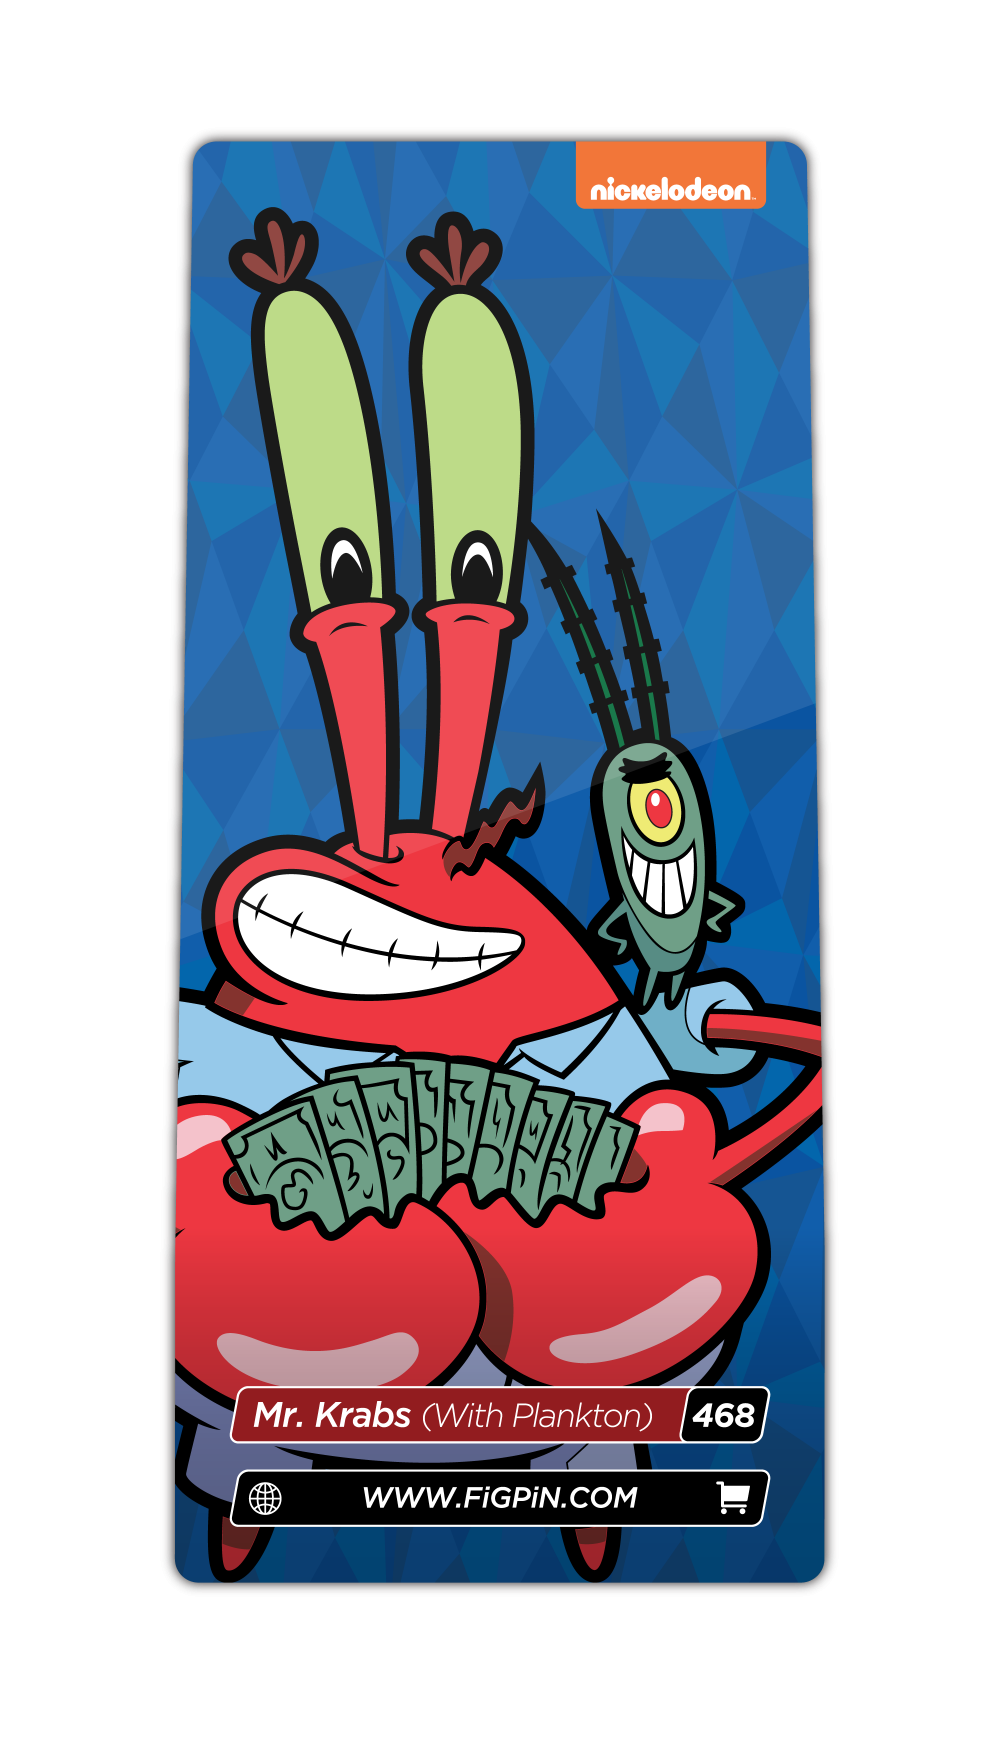 Mr. Krabs (With Plankton) (468)